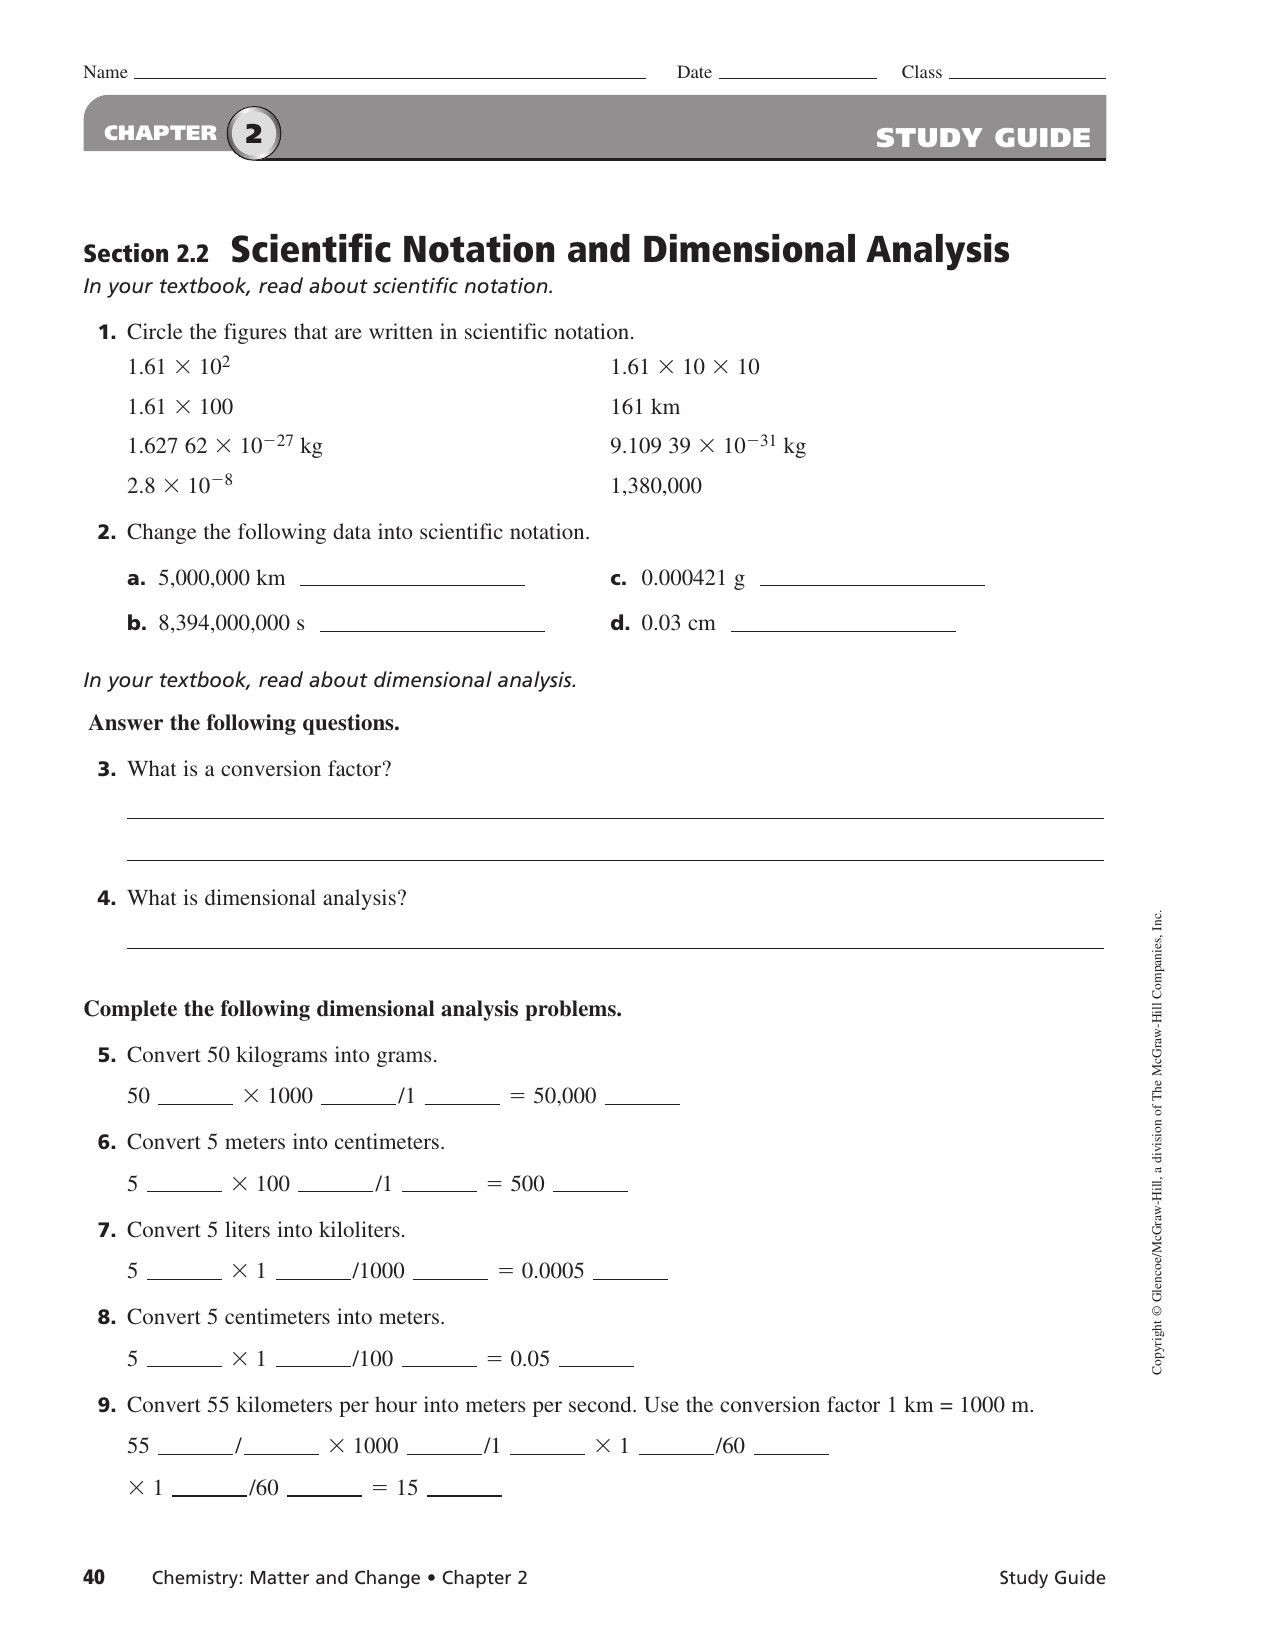 Dimensional Analysis Worksheet 2 Prime Dimensional Analysis Worksheet Chemistry